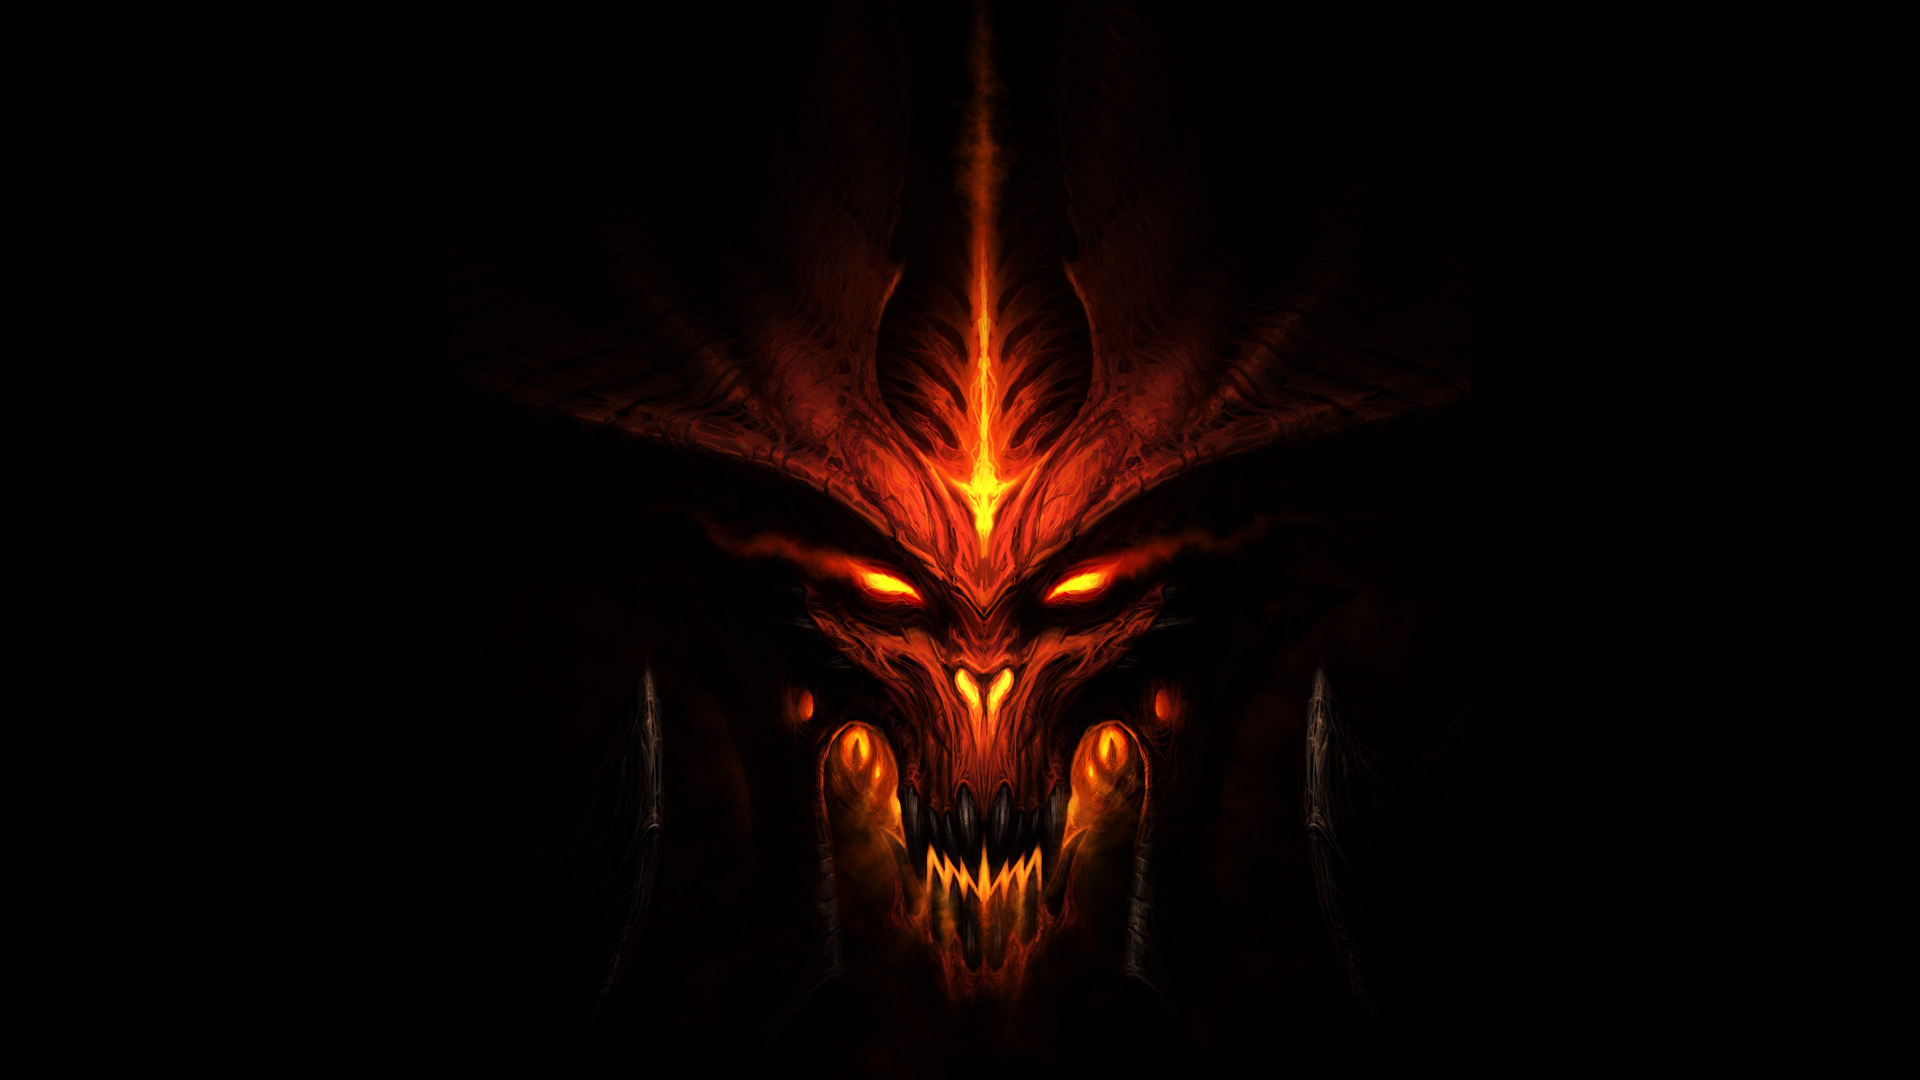 Diablo HD Wallpaper In Games Imageci